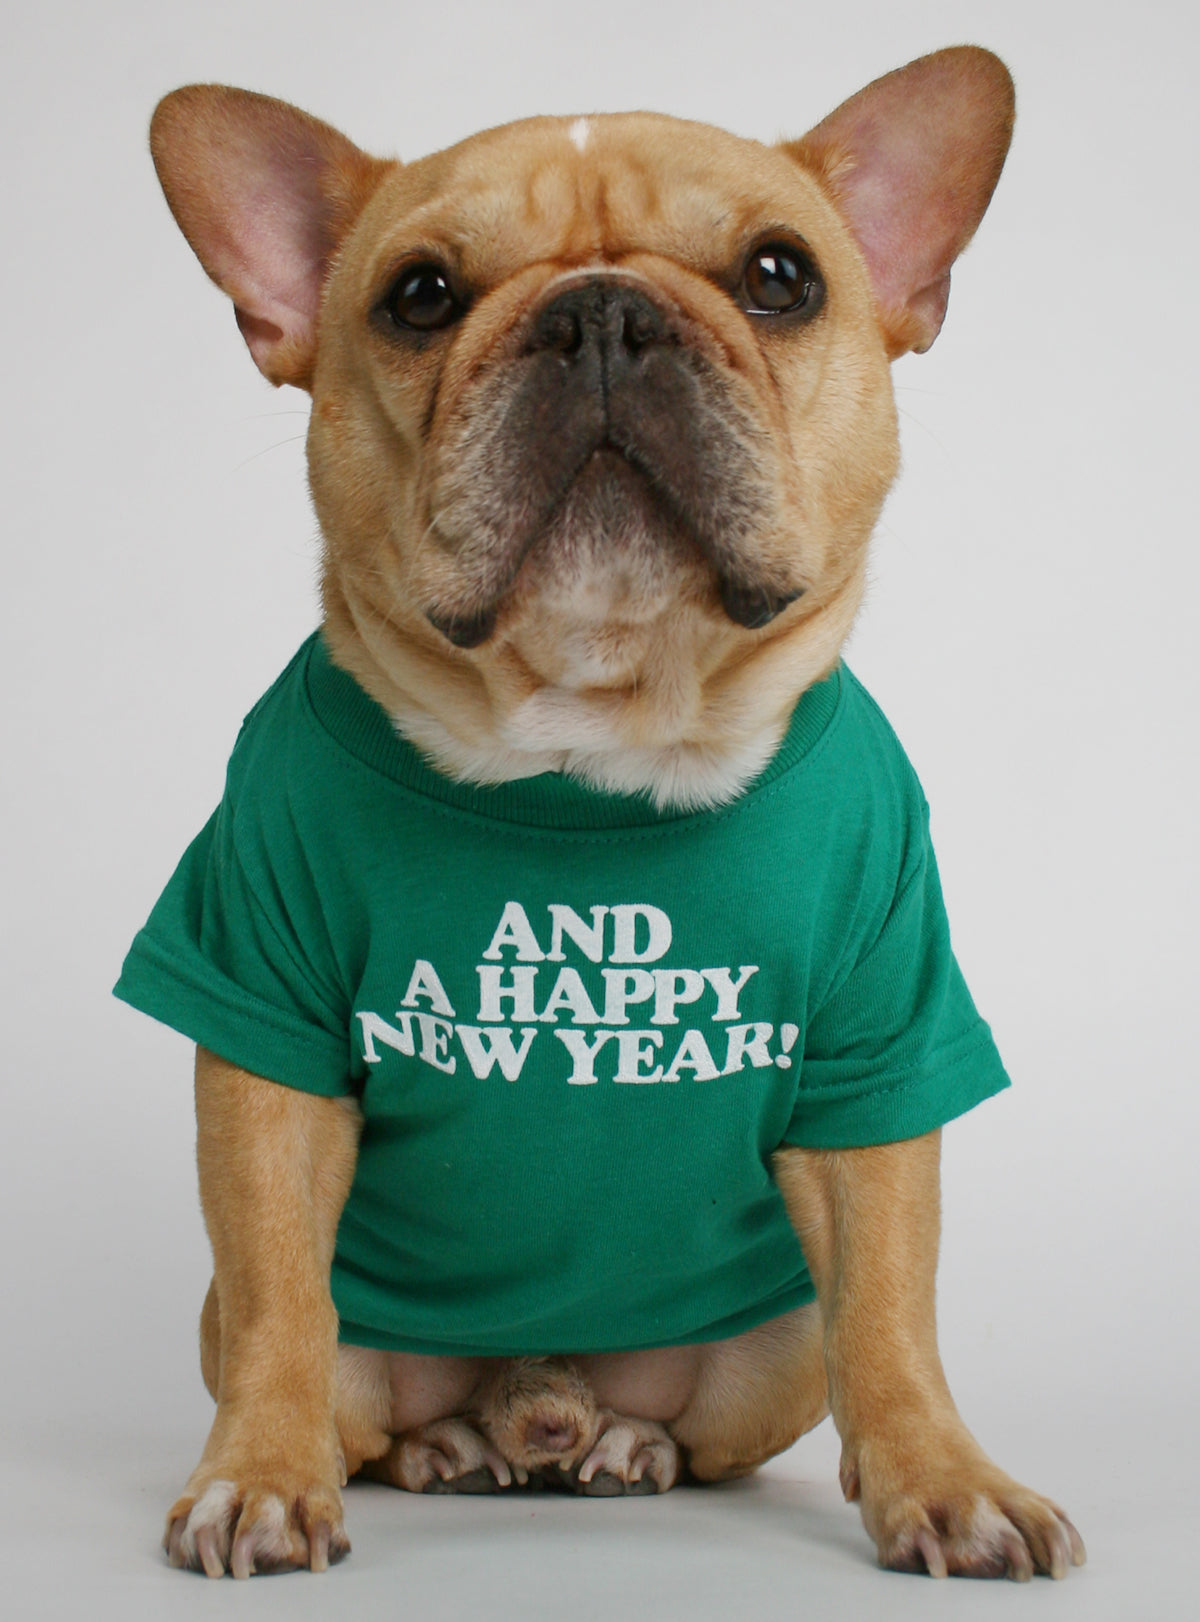 Merry Christmas Ya Filthy Animal Matching T-Shirt Set